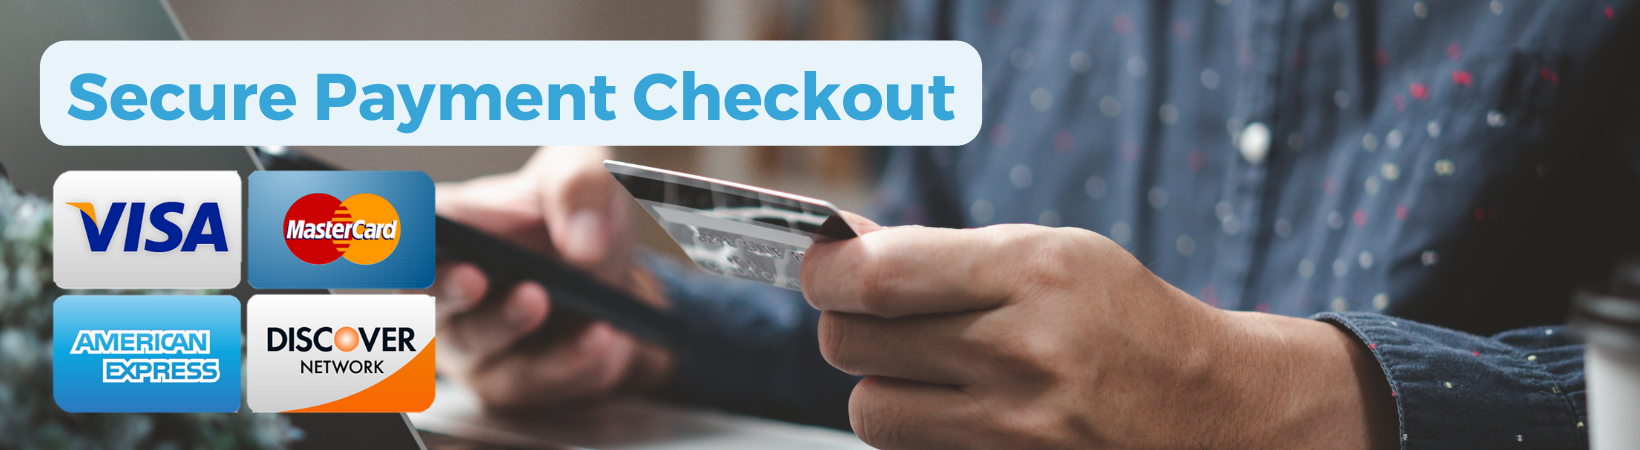 Secure Payment Checkout